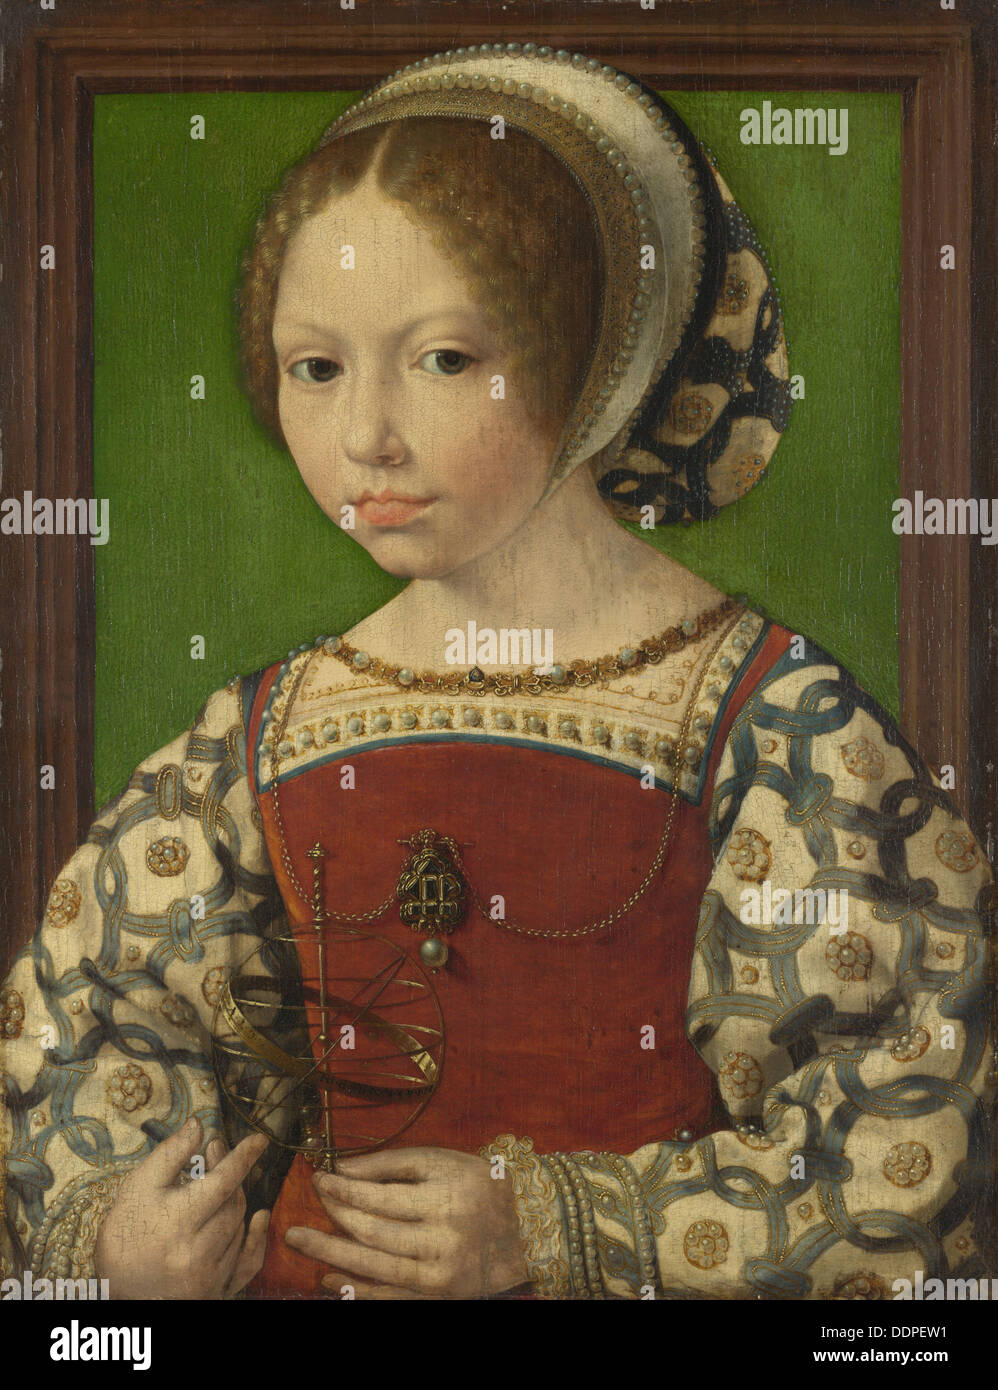 Retrato de la Princesa Dorothea de Dinamarca (1520-1580), ca 1530. Artista: Gossaert, Jan (ca. 1478-1532) Foto de stock